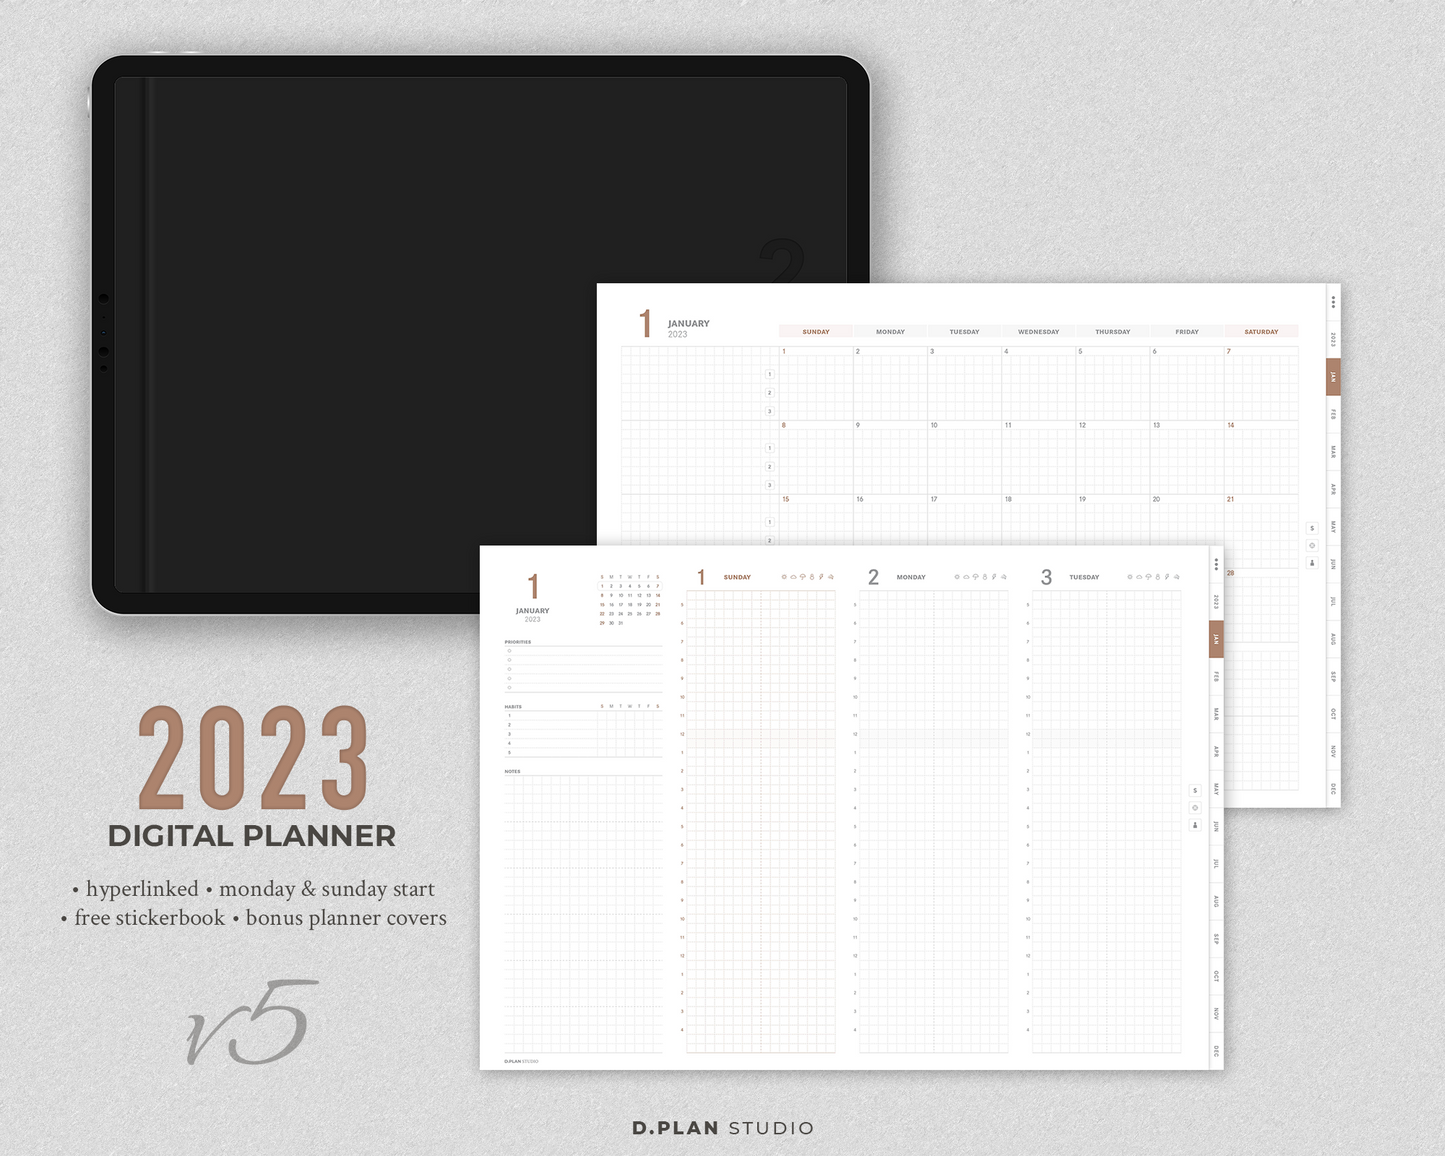 2023 Hyperlinked Digital Planner - V5